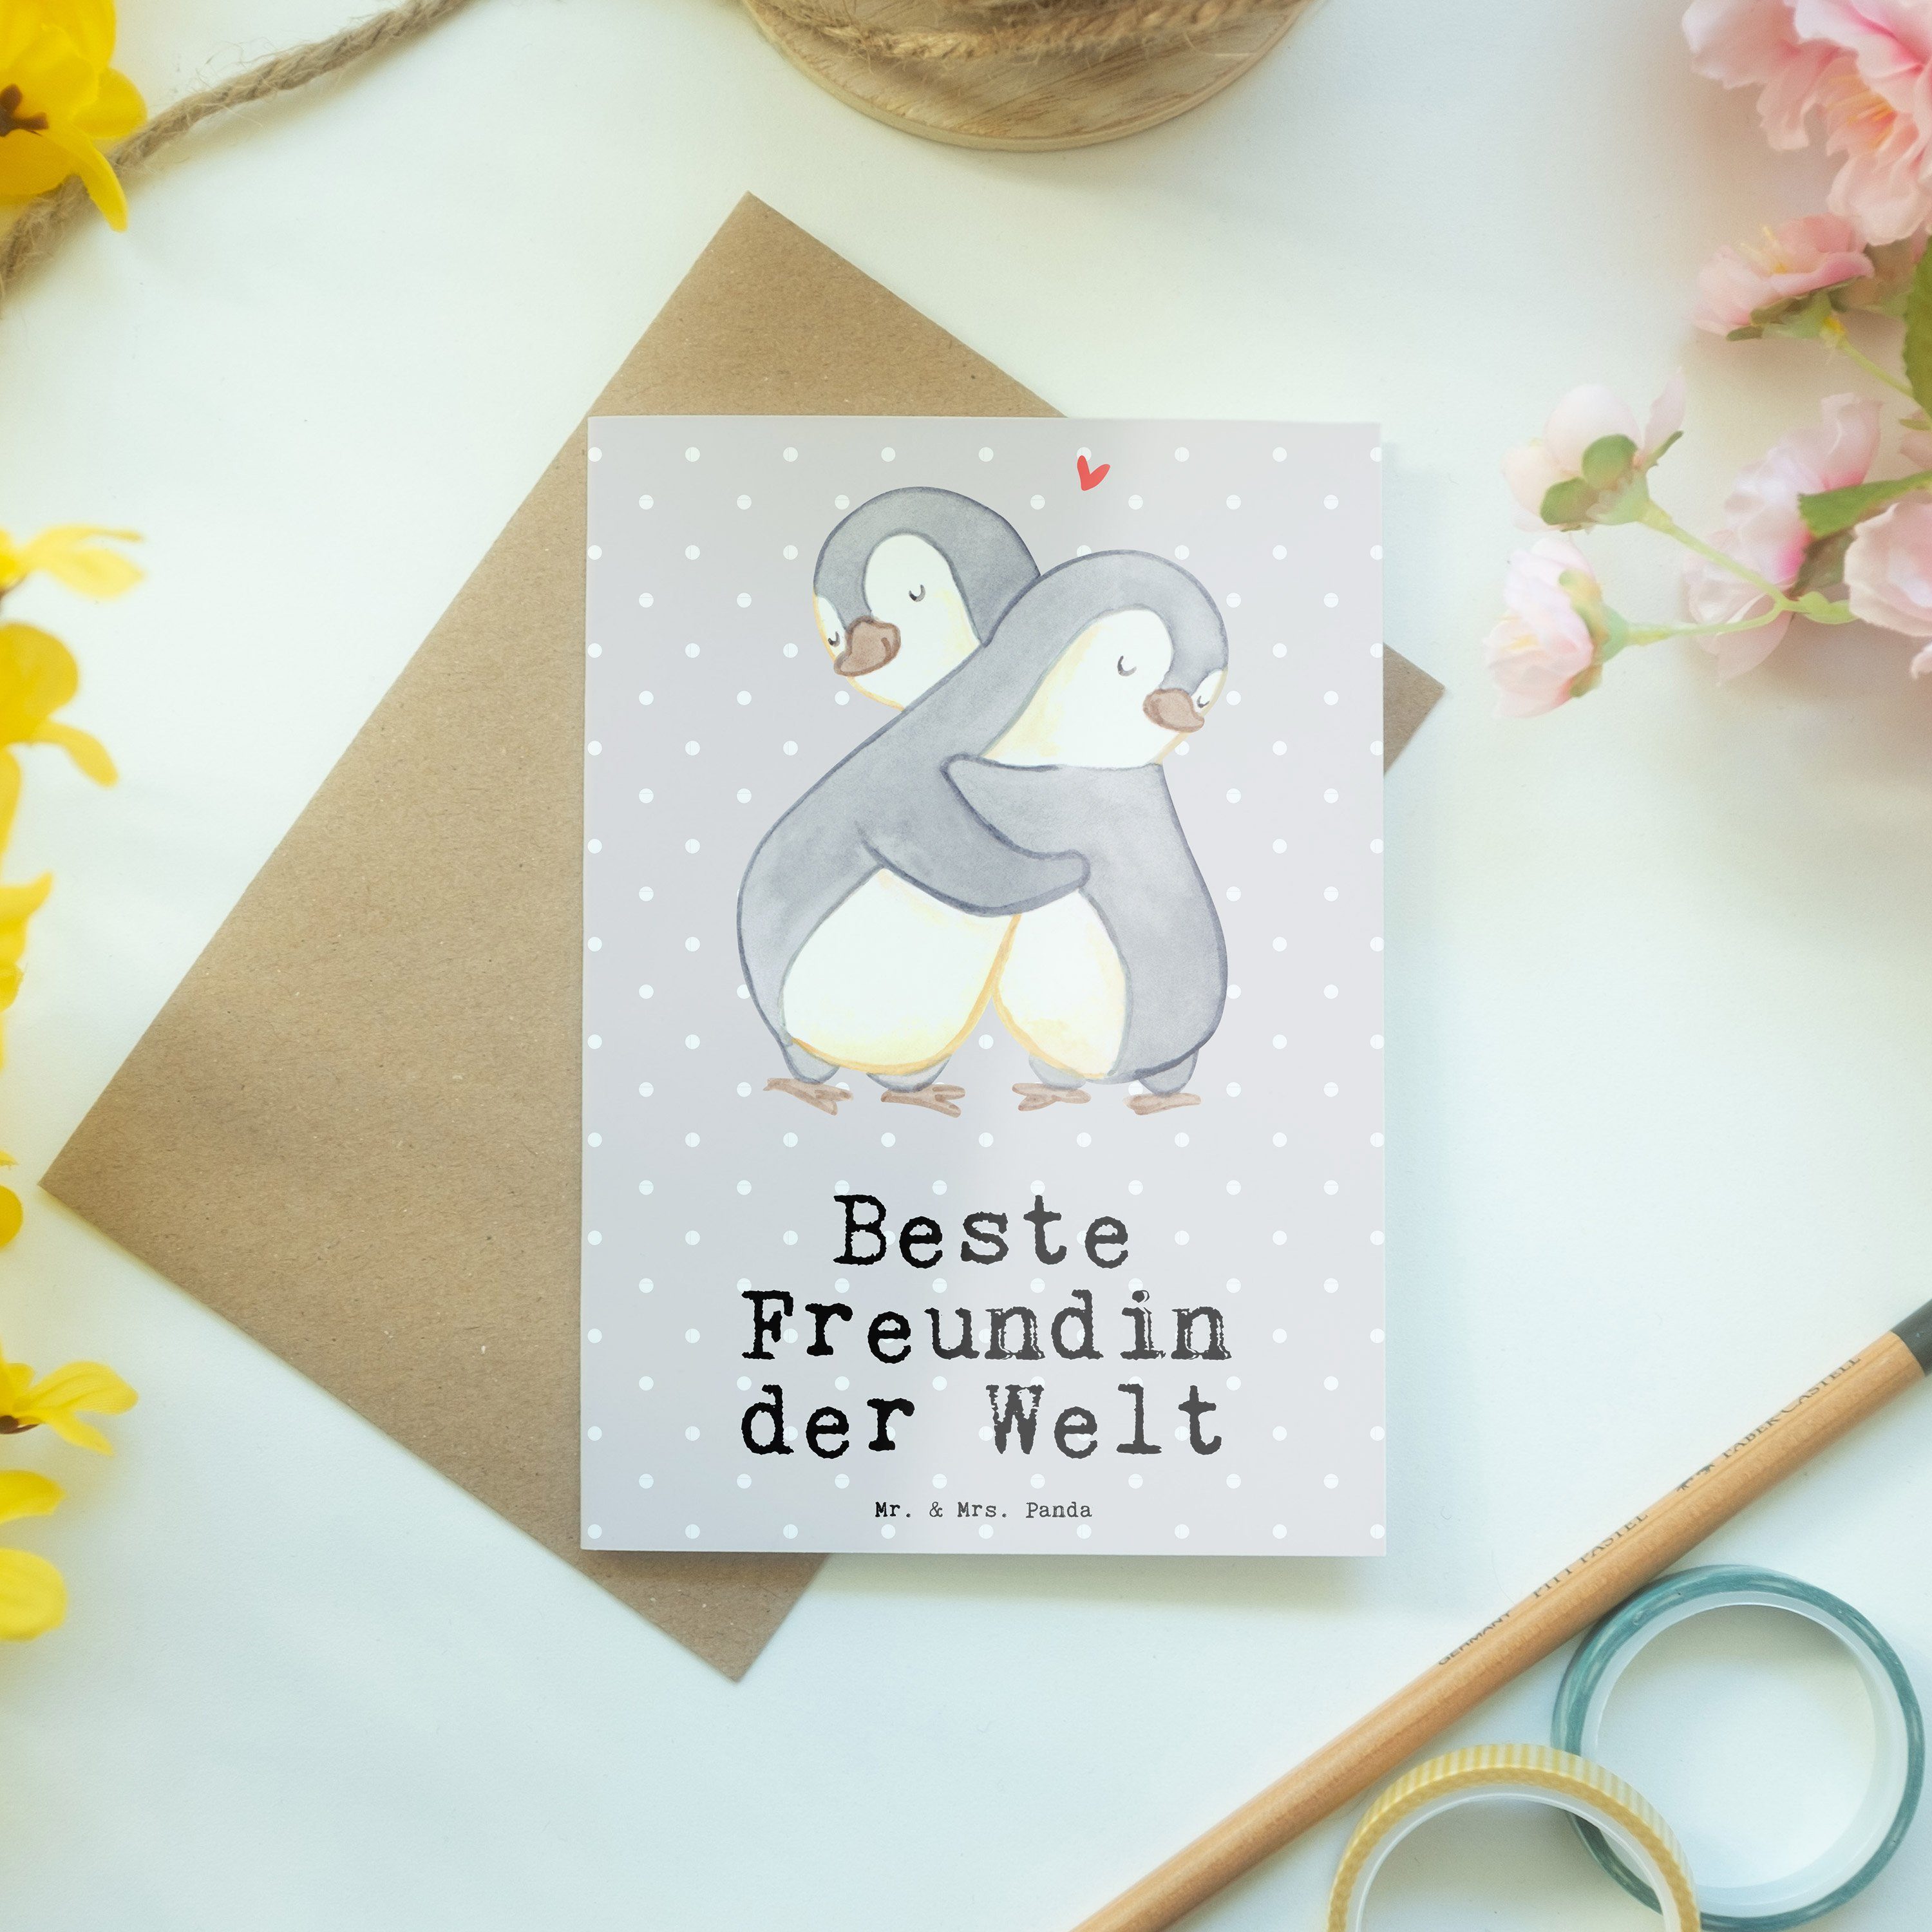 Grau Pastell Beste Pinguin Panda Grußkarte & Mr. Hoc Mrs. Danke, Freundin Welt der - Geschenk, -